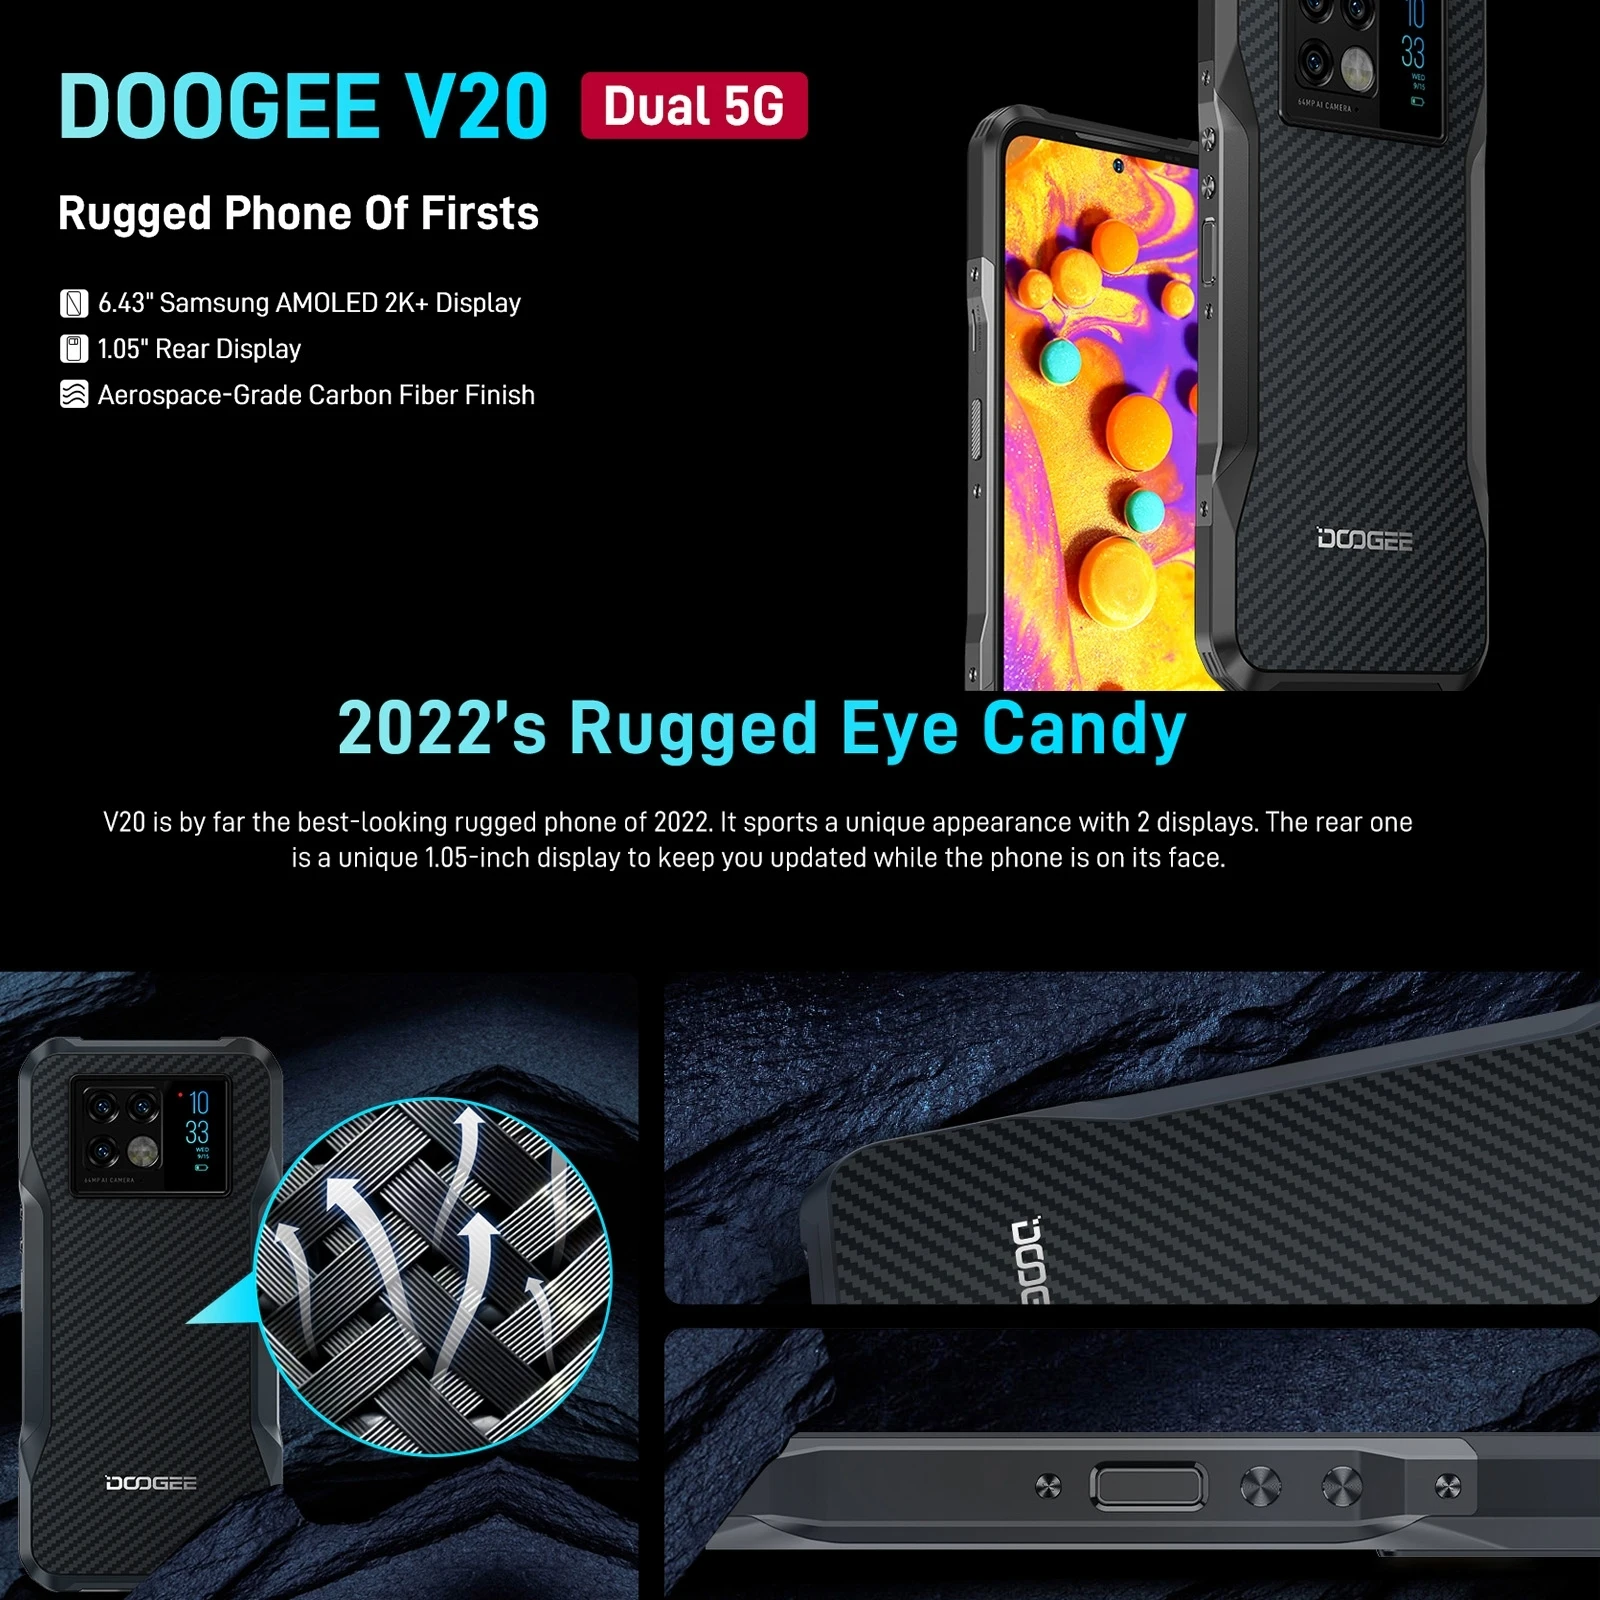 DOOGEE V20 Dual 5G Smartphone 256GB ROM 8GB RAM Rugged Phone Dimensity 700 Octa-Core 6.43